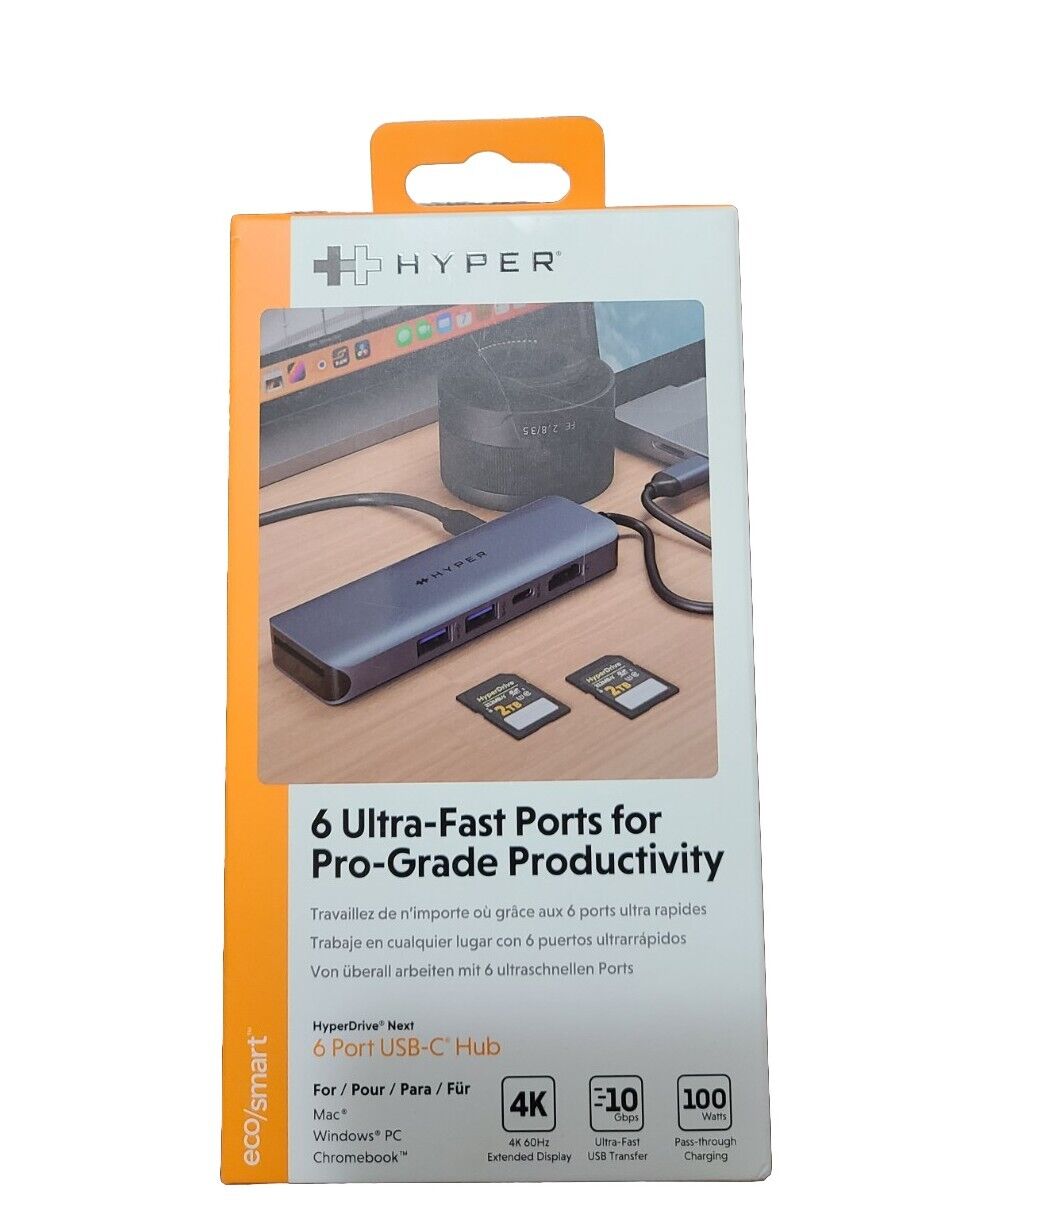  HyperDrive Next 6 Port USB-C Hub MacBook/PC 